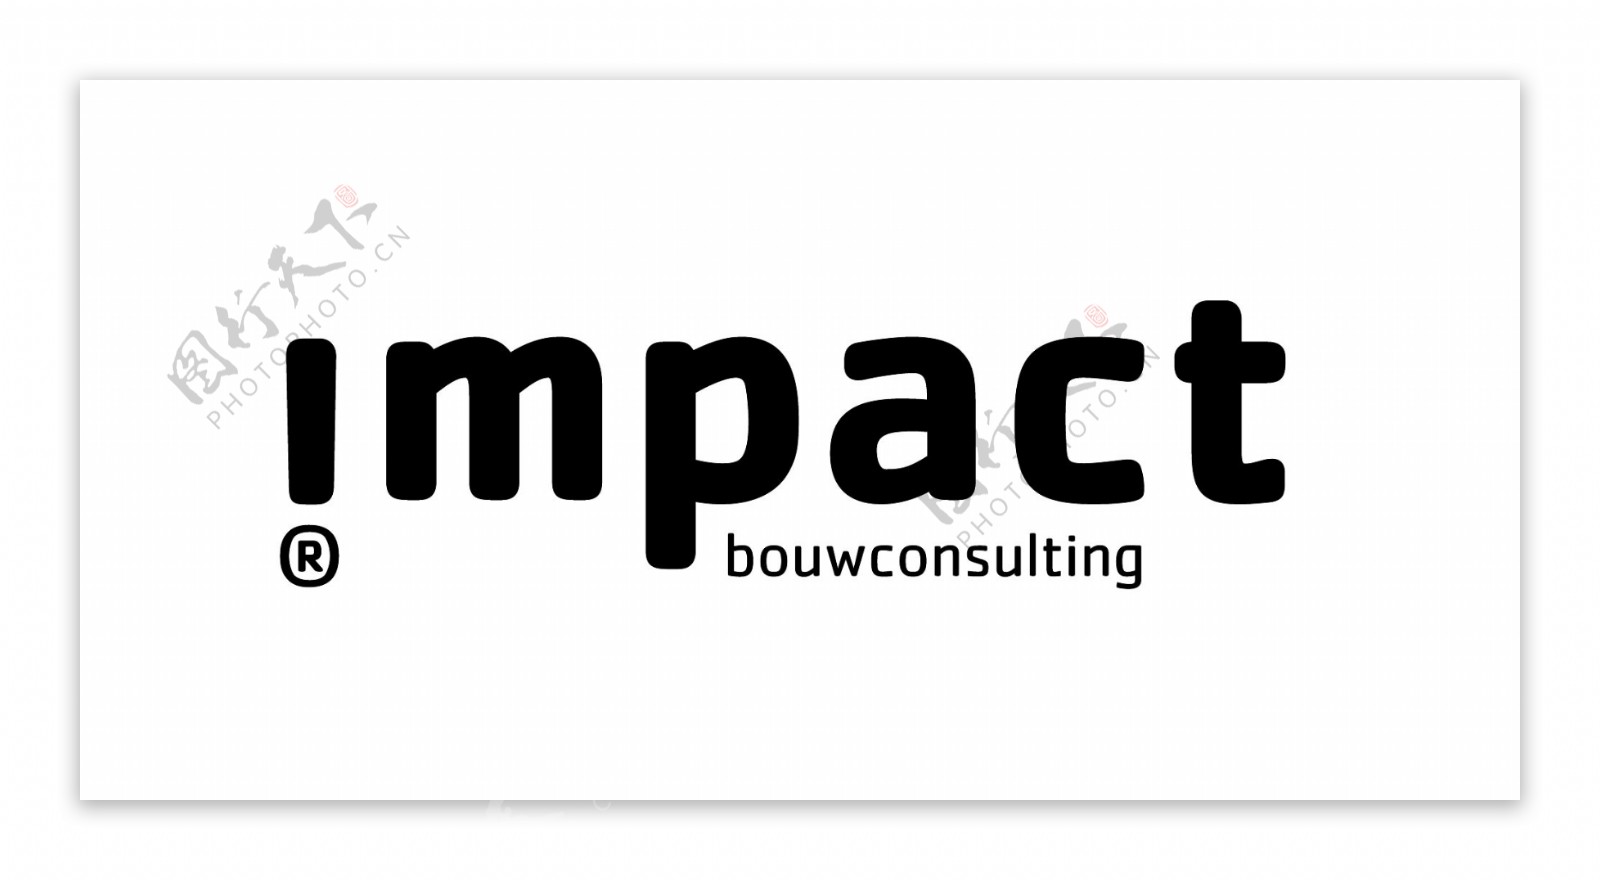 Impactbouwconsultinglogo设计欣赏Impactbouwconsulting服务公司标志下载标志设计欣赏